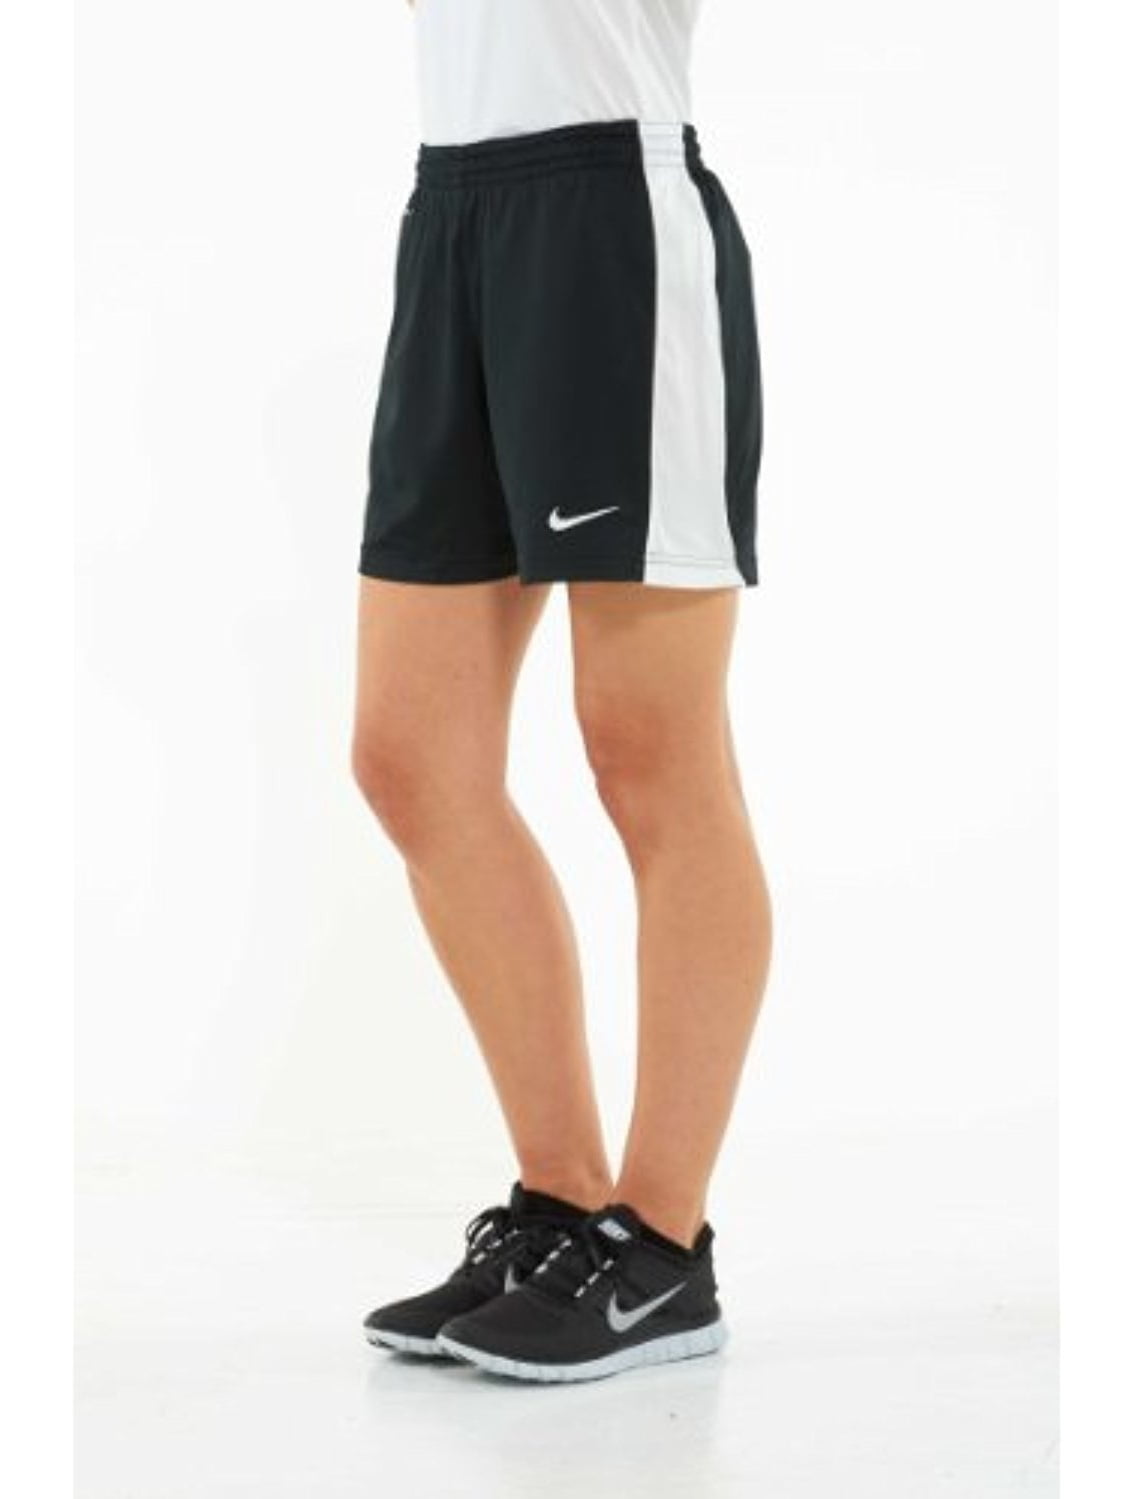 Nike Womens Flex Trainer 7 Low Top Lace Up, Black/Metallic Silver, Size 7.5 Walmart.com